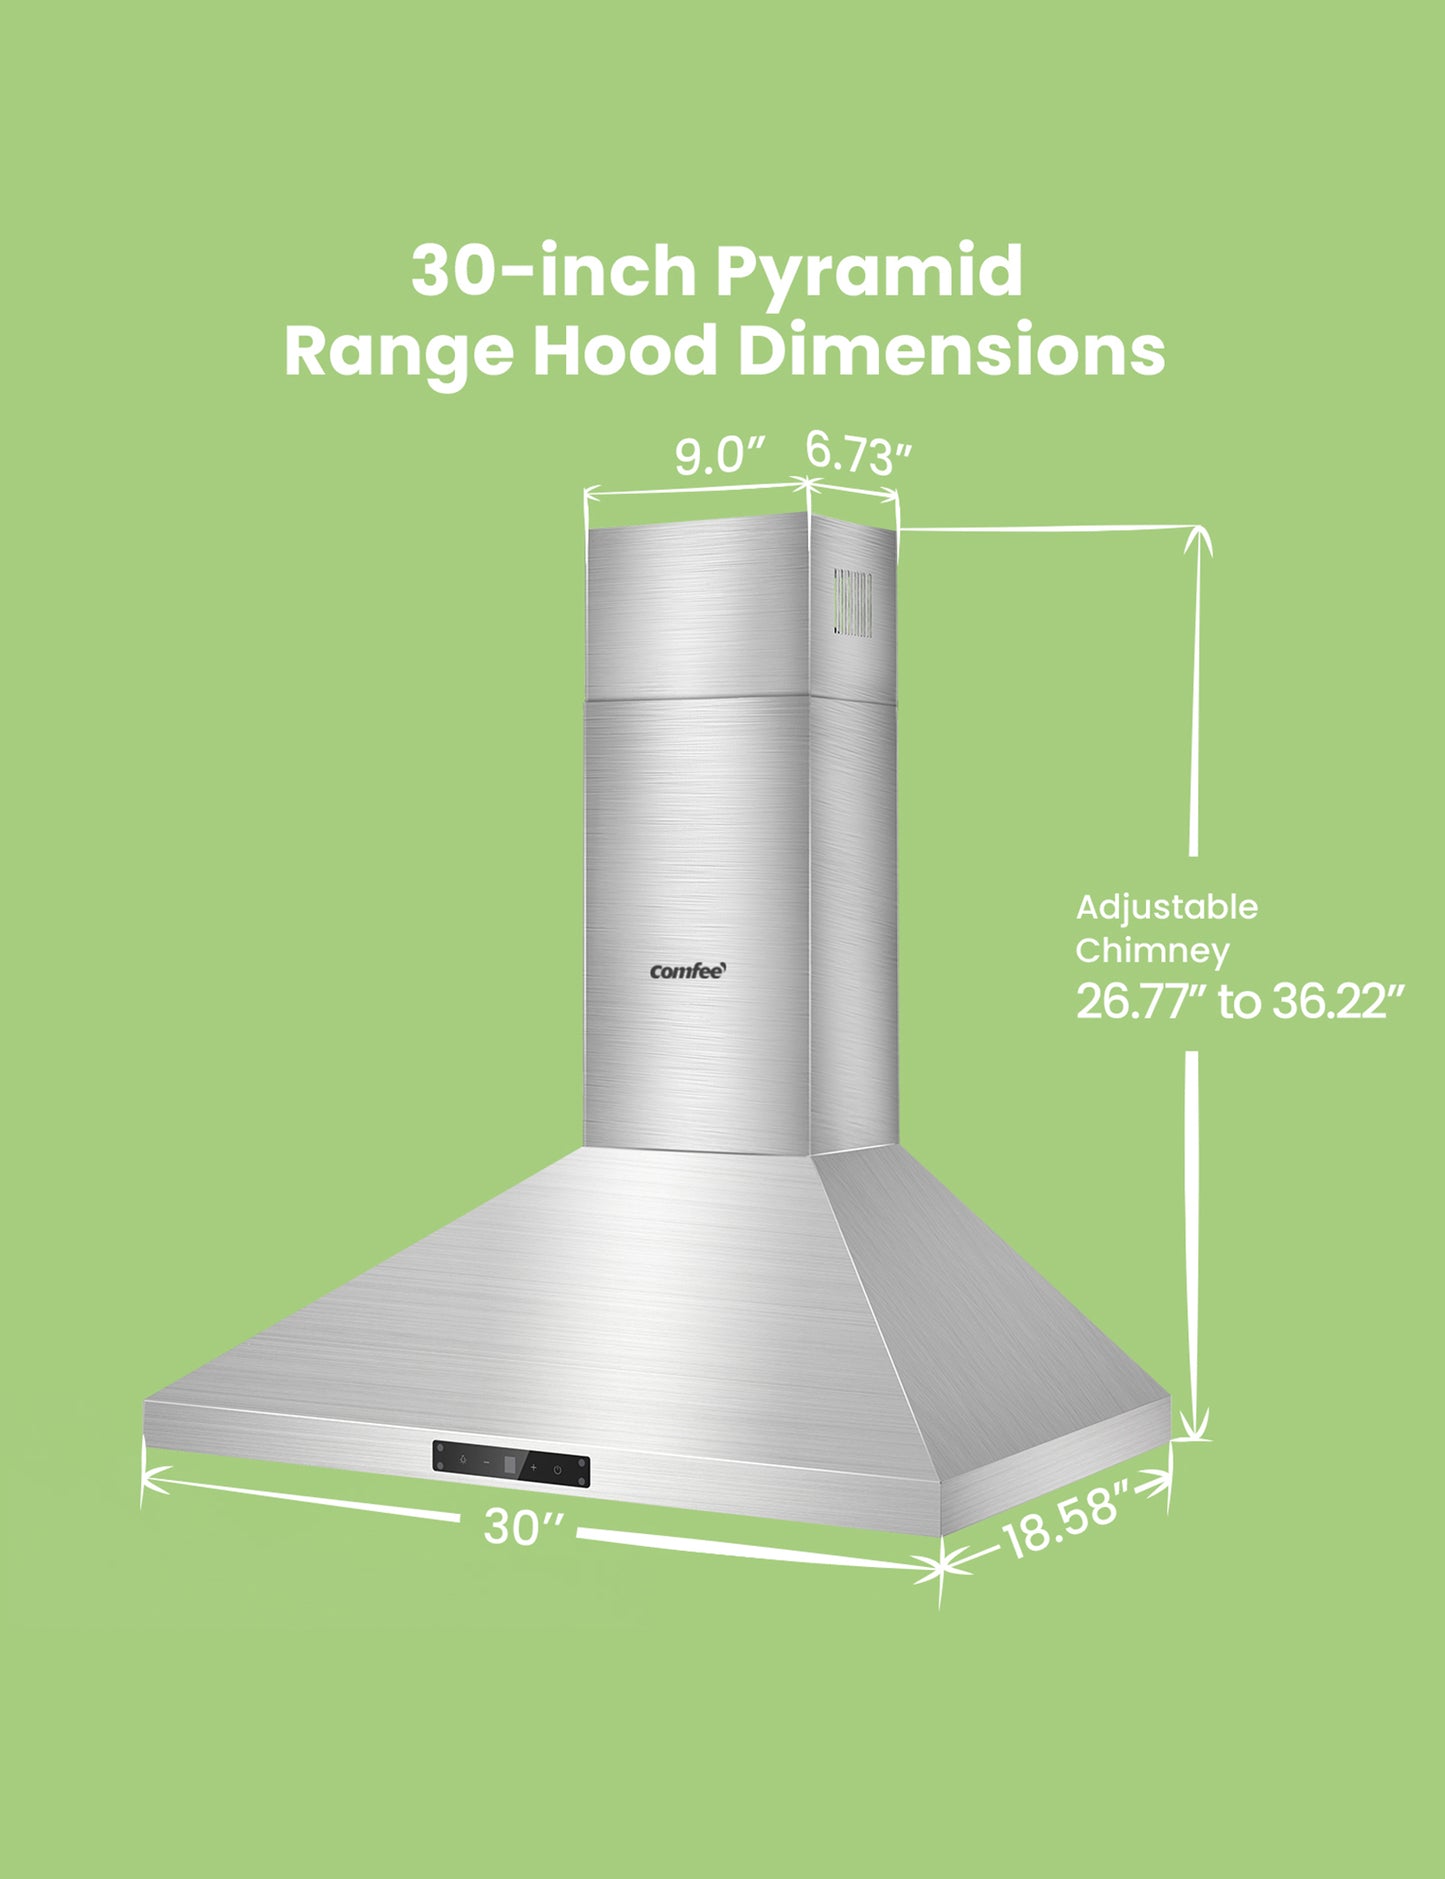 measurements of the comfee pyramid range hood